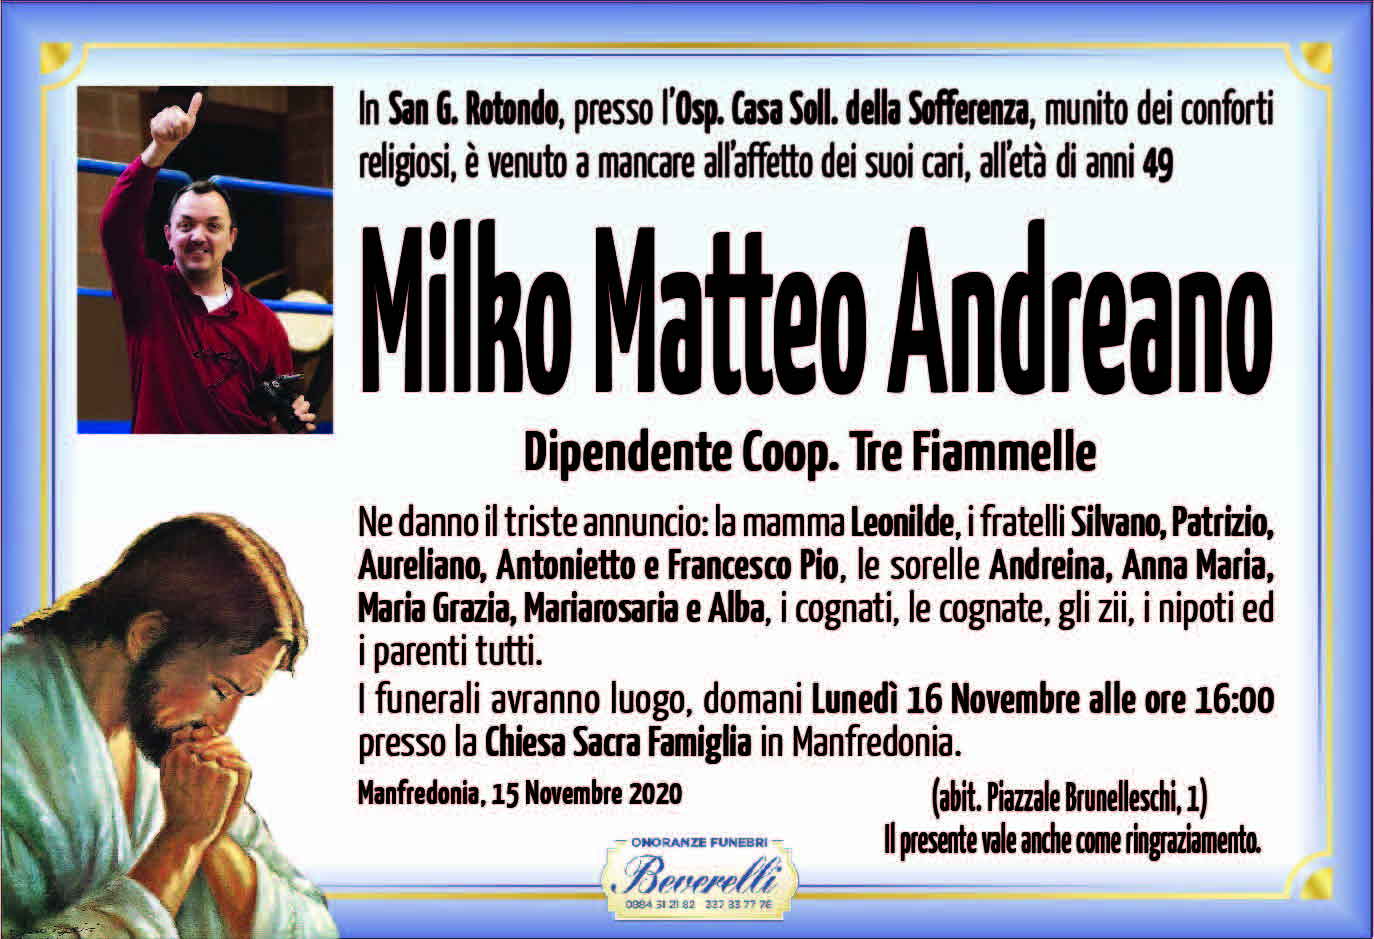 Milko Matteo Andreano